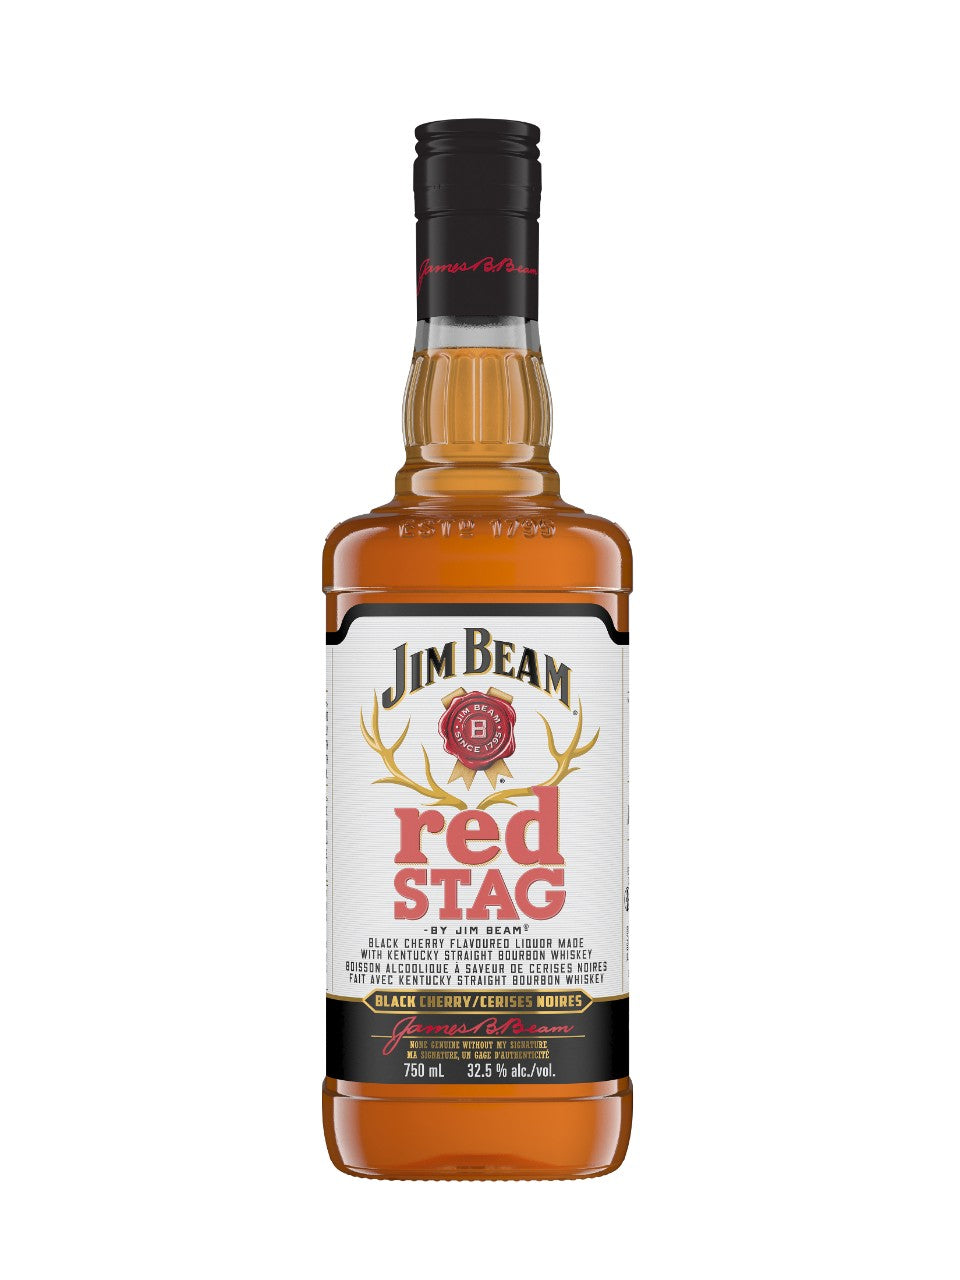 JIM BEAM RED STAG (32.5%) 750mL